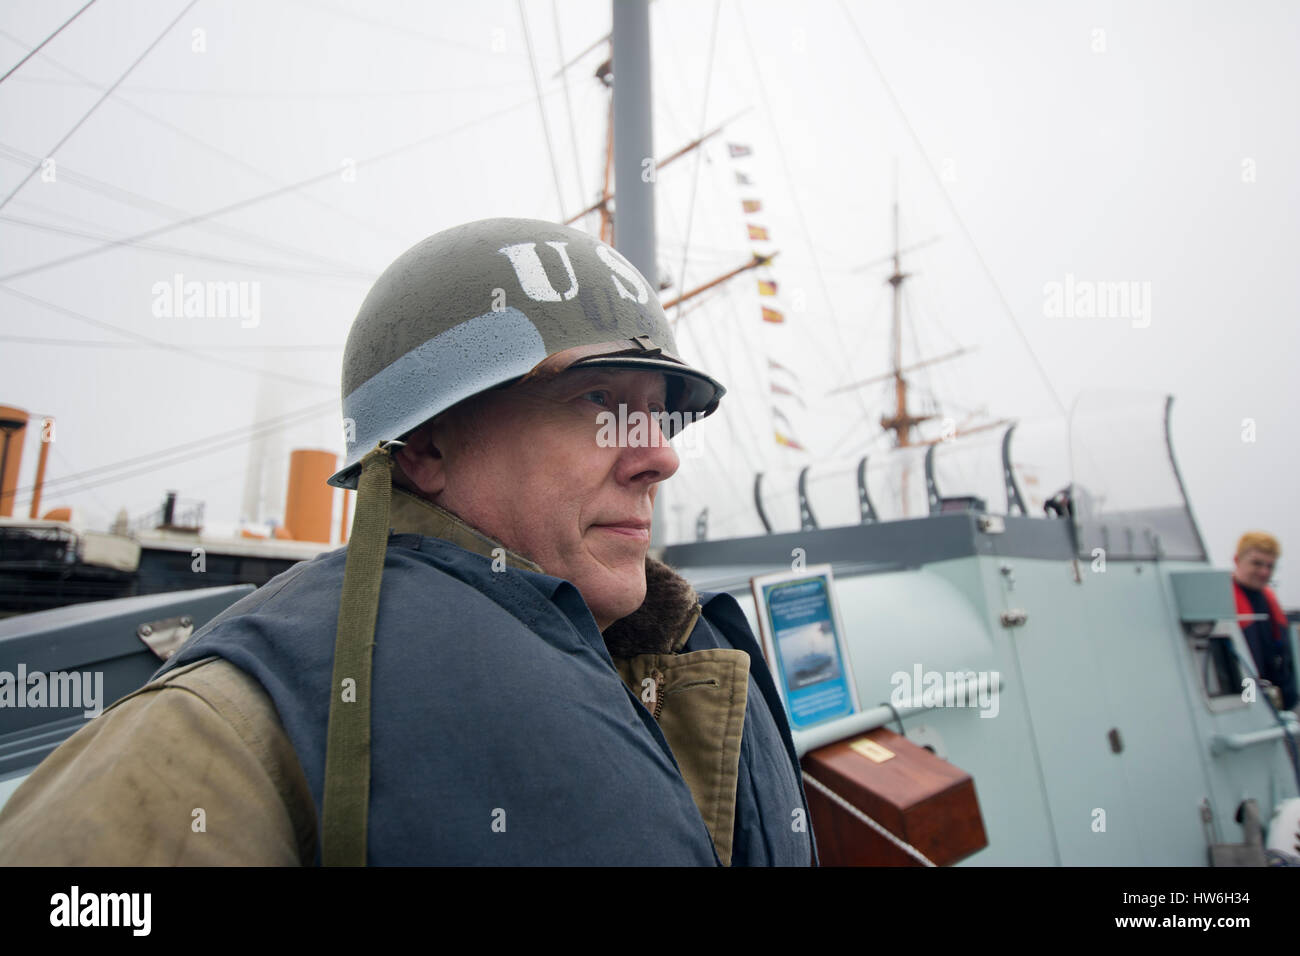 American soldier onboard the WW2 British MTB, Motor Torpedo Boat, looking away Stock Photo